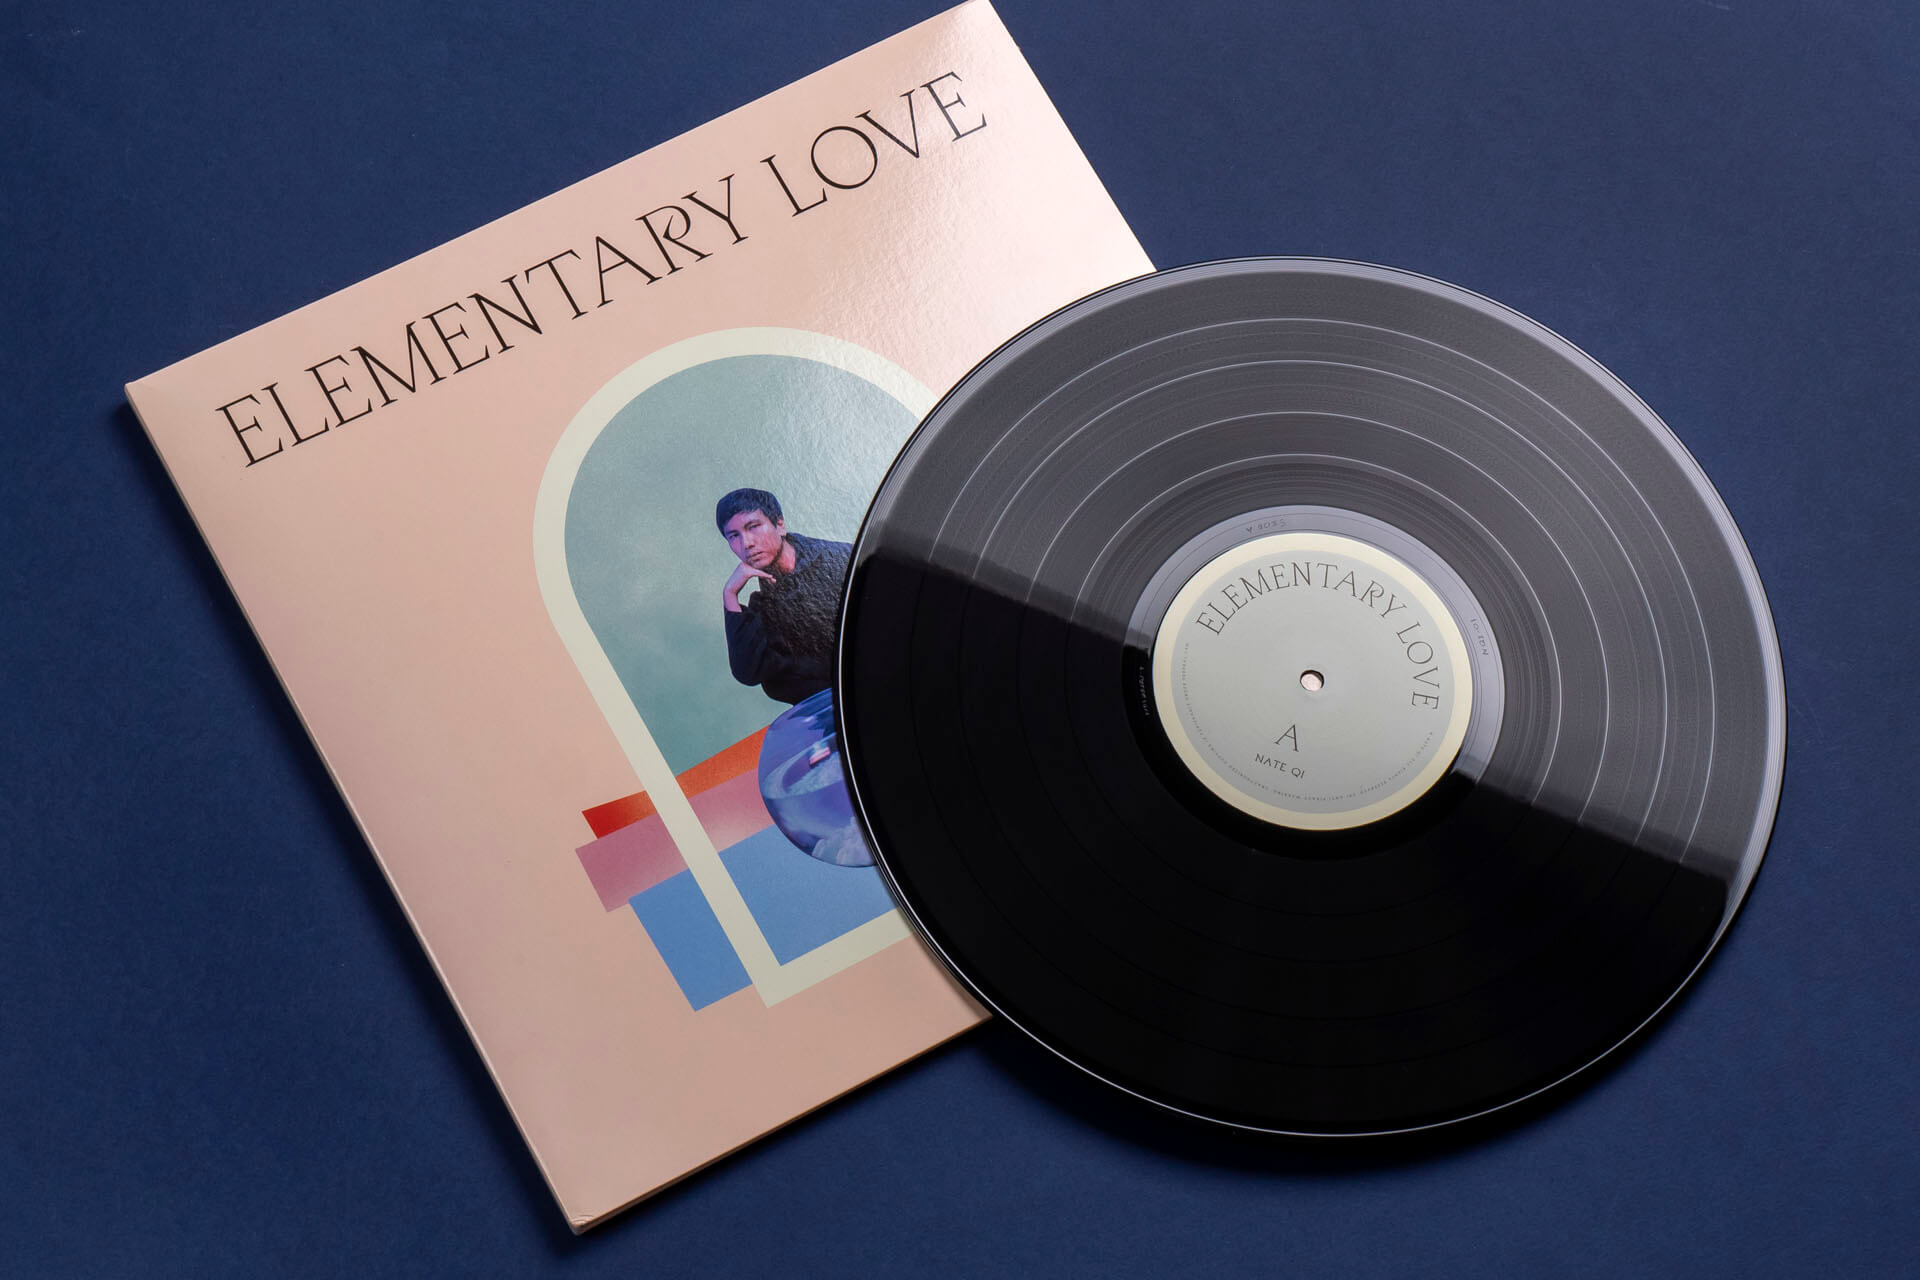 elementary-love-nate-qi-edition-vynile-cover-album-music-studio-plastac